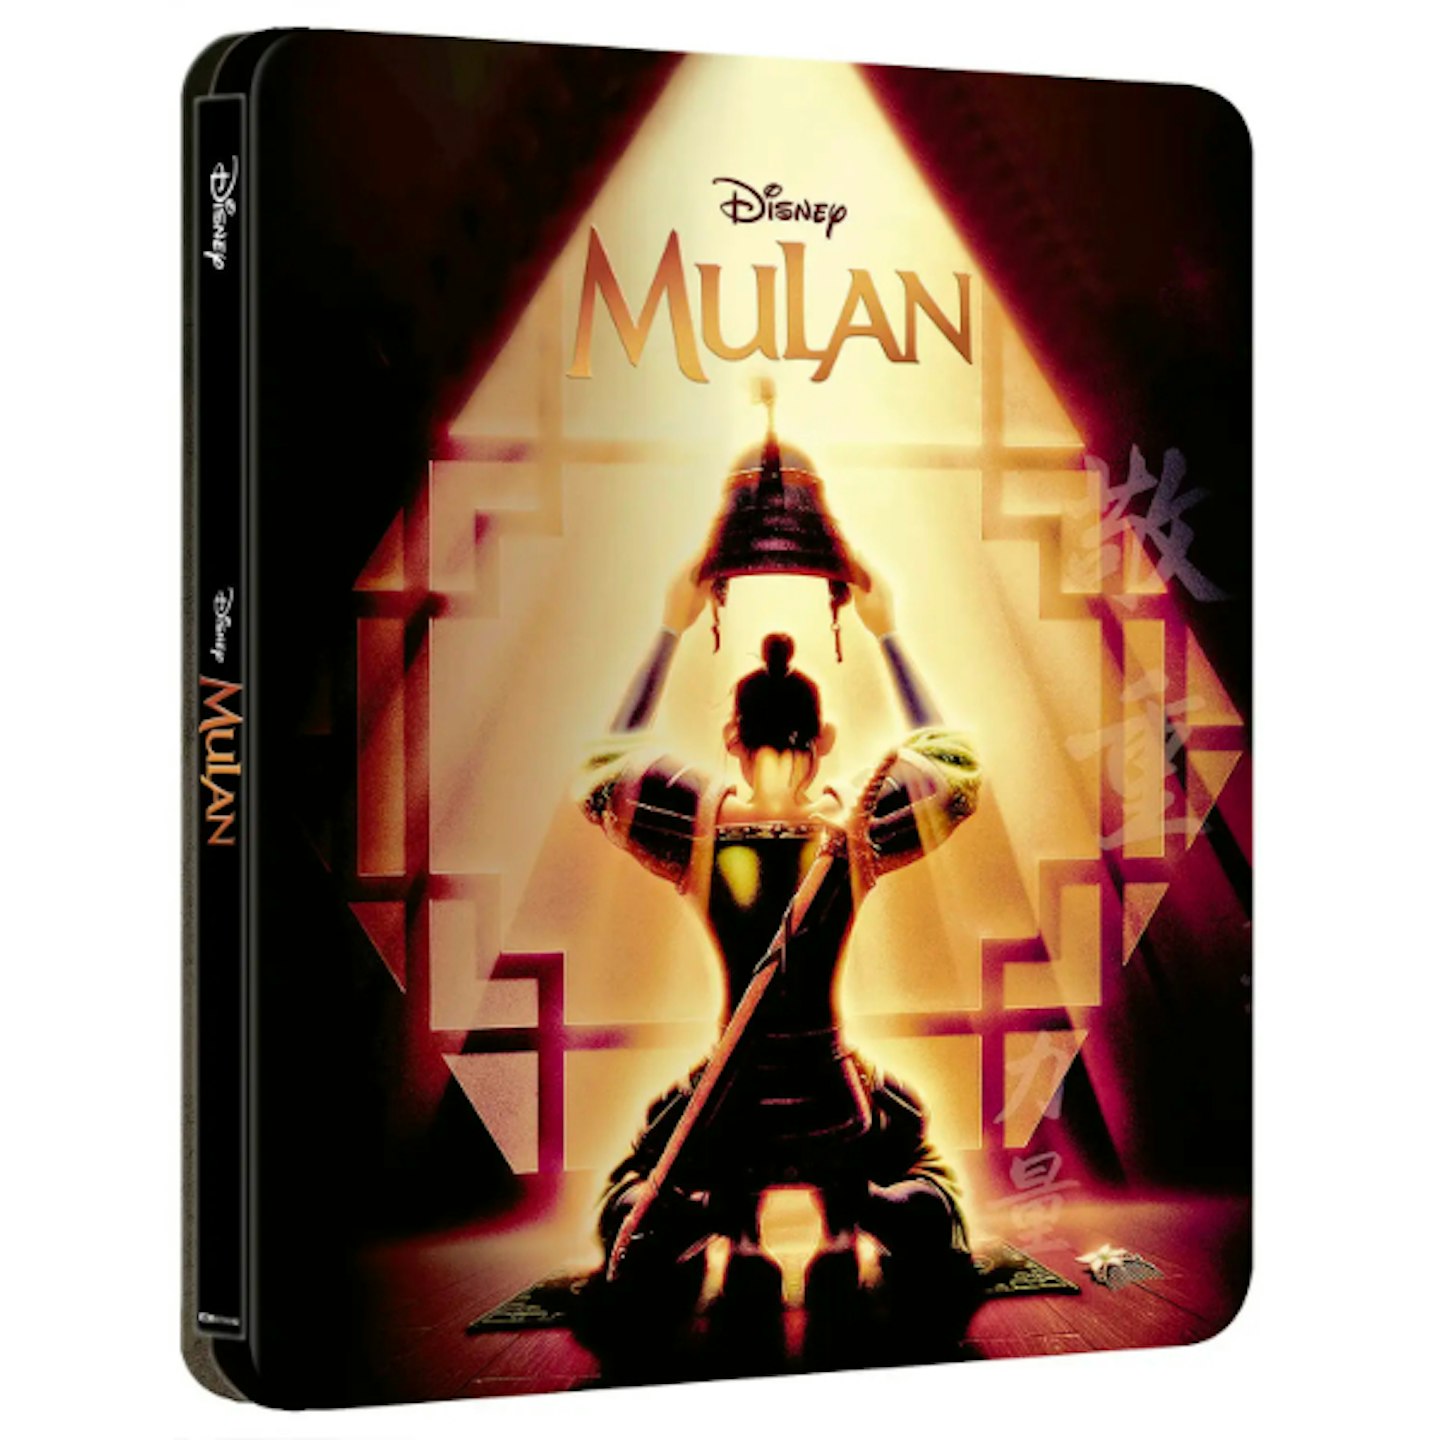 Disney's Mulan (Animated) - Zavvi Exclusive 4K Ultra HD Steelbook